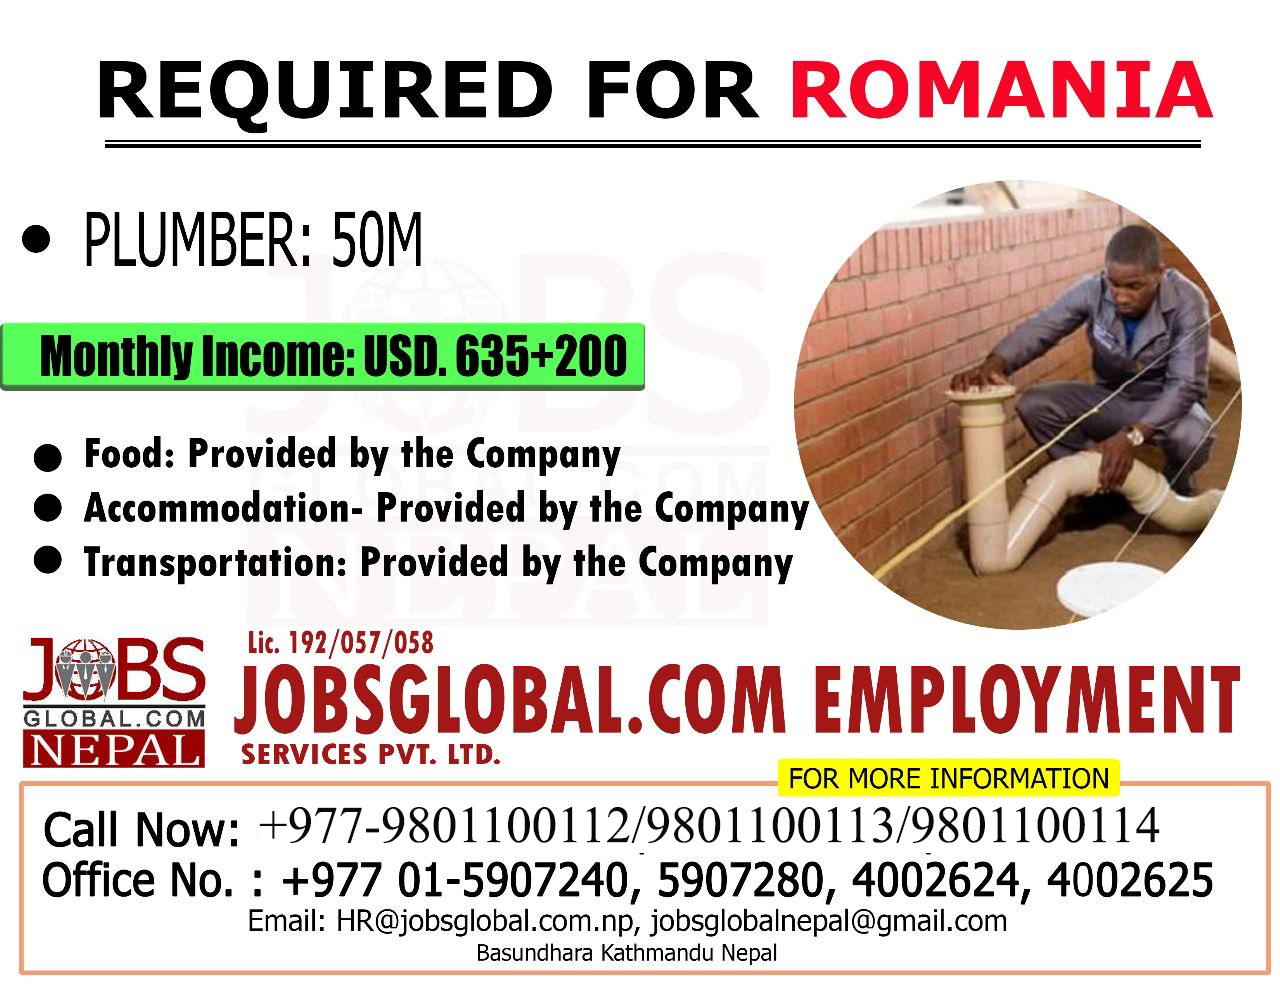 Jobs Global.com Emploment - Romania Requirements-:Plumber